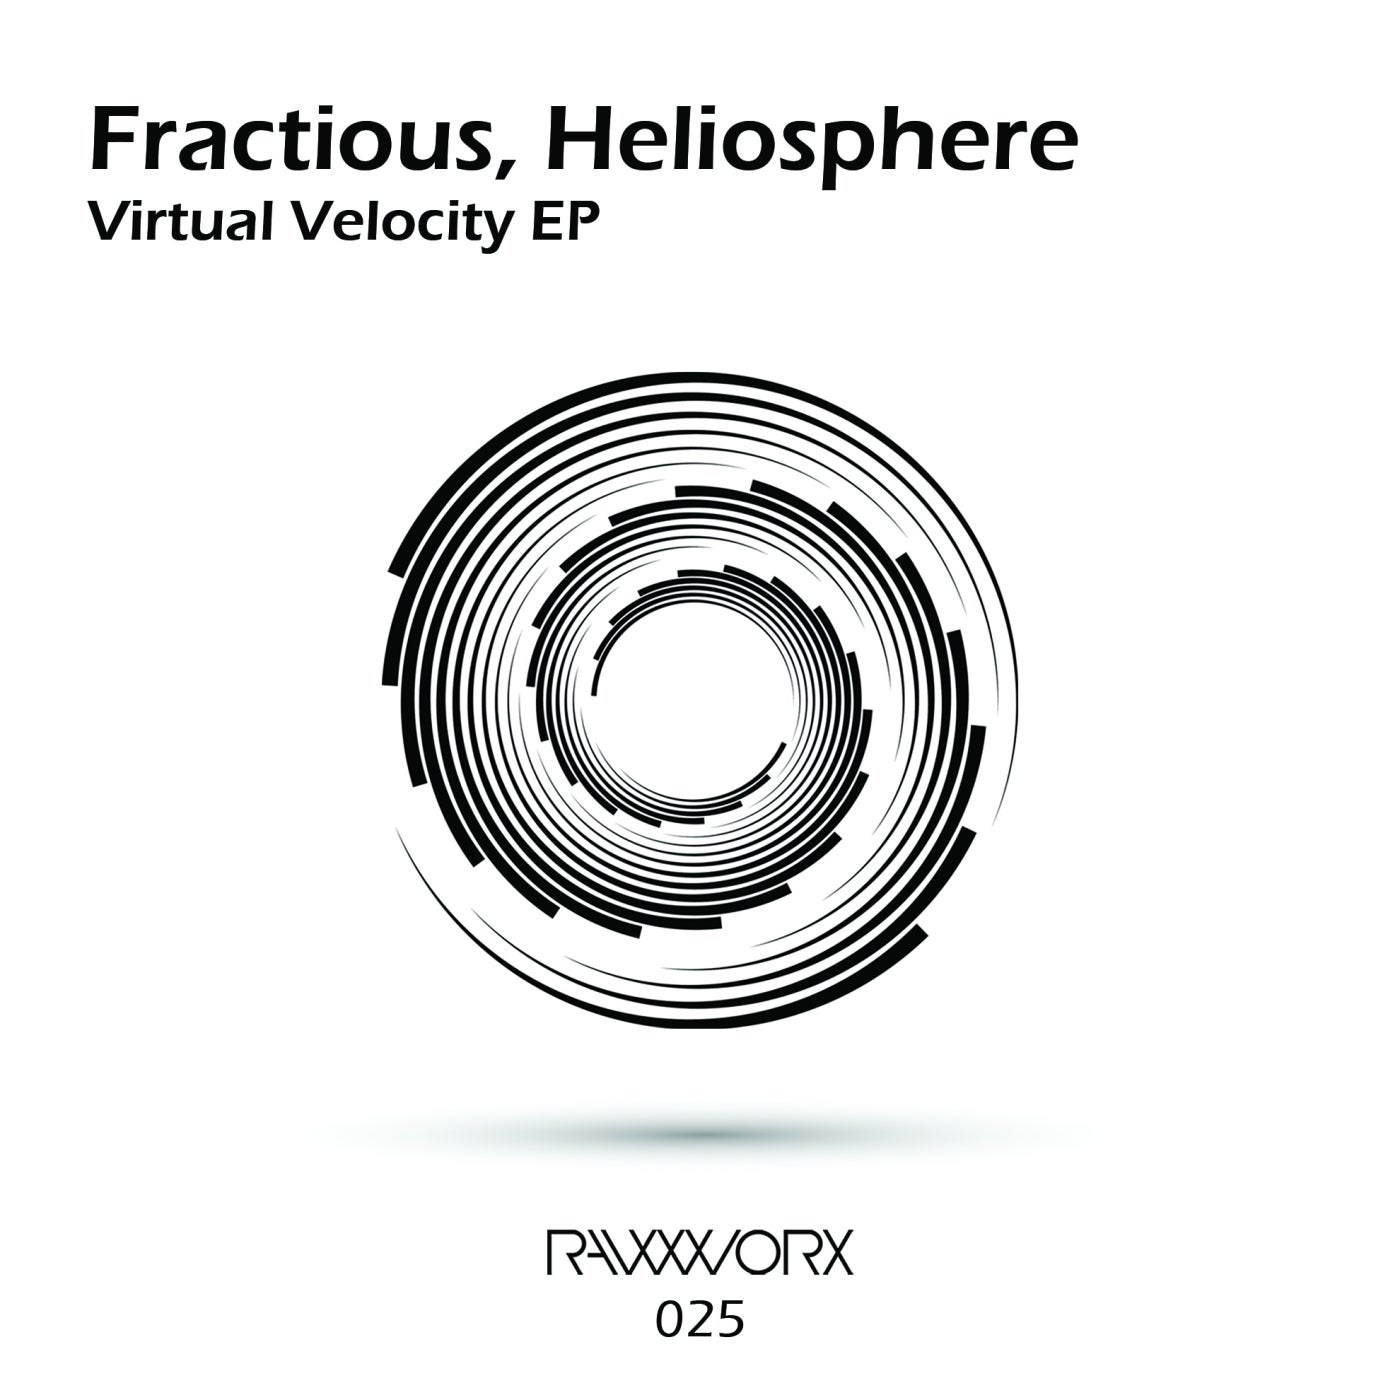 Virtual Velocity EP